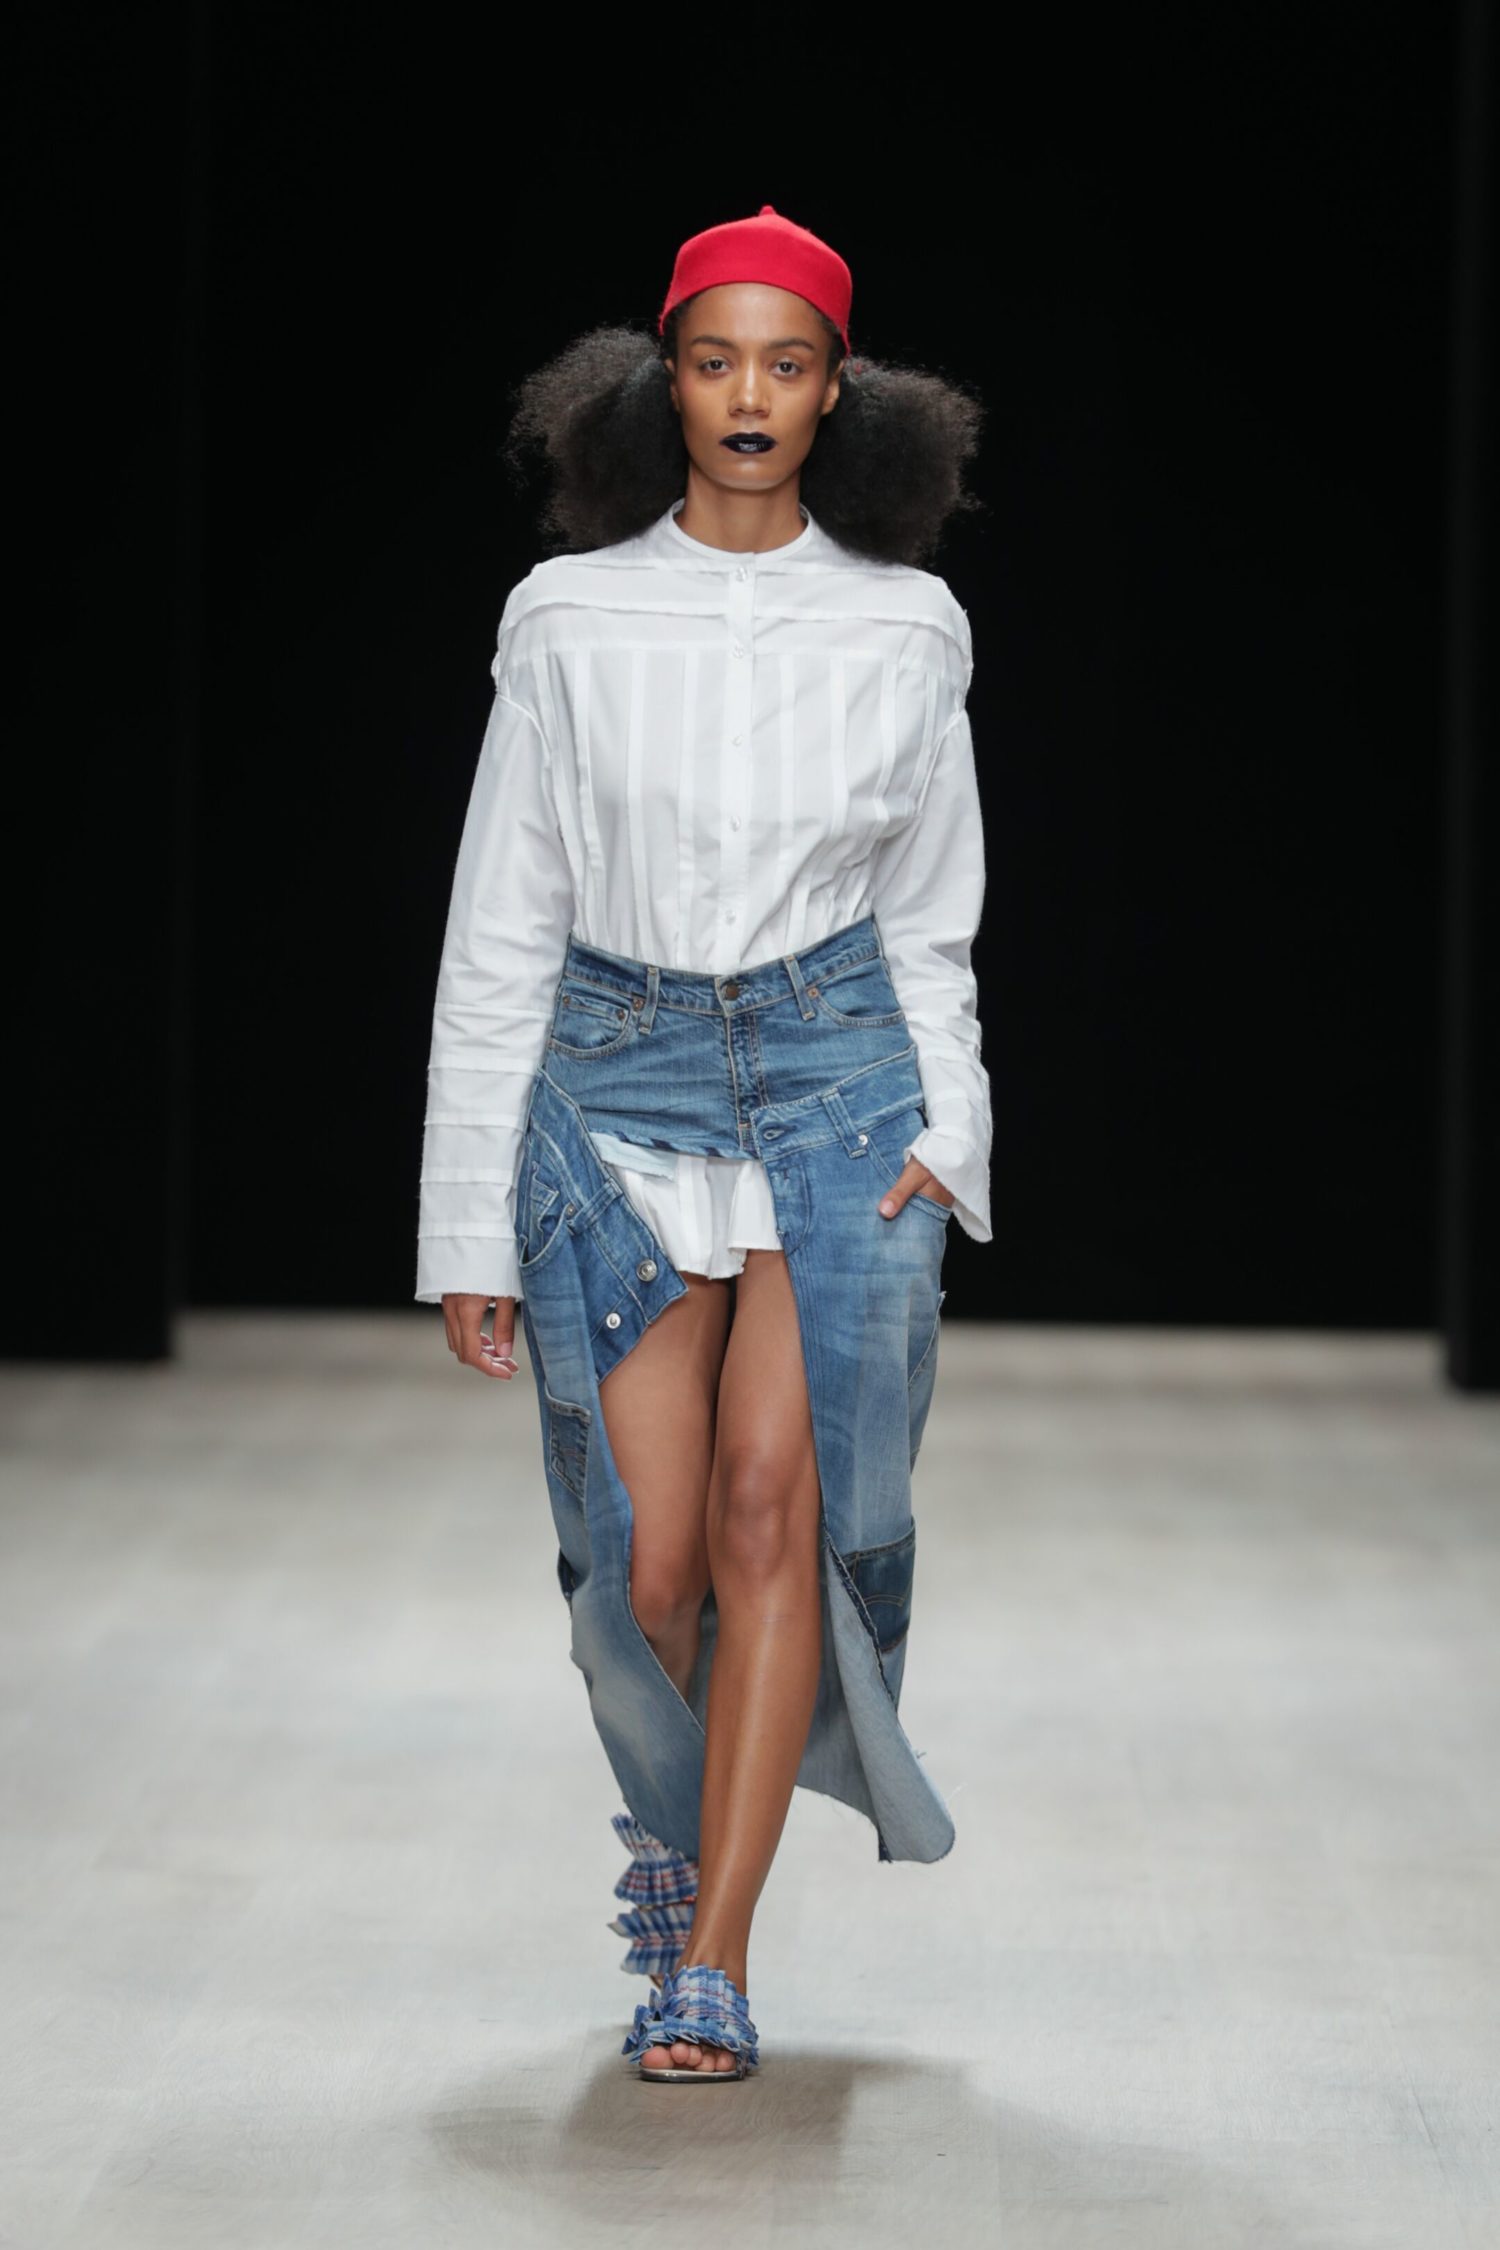 ARISE Fashion Week 2019 | NKWO | BN Style